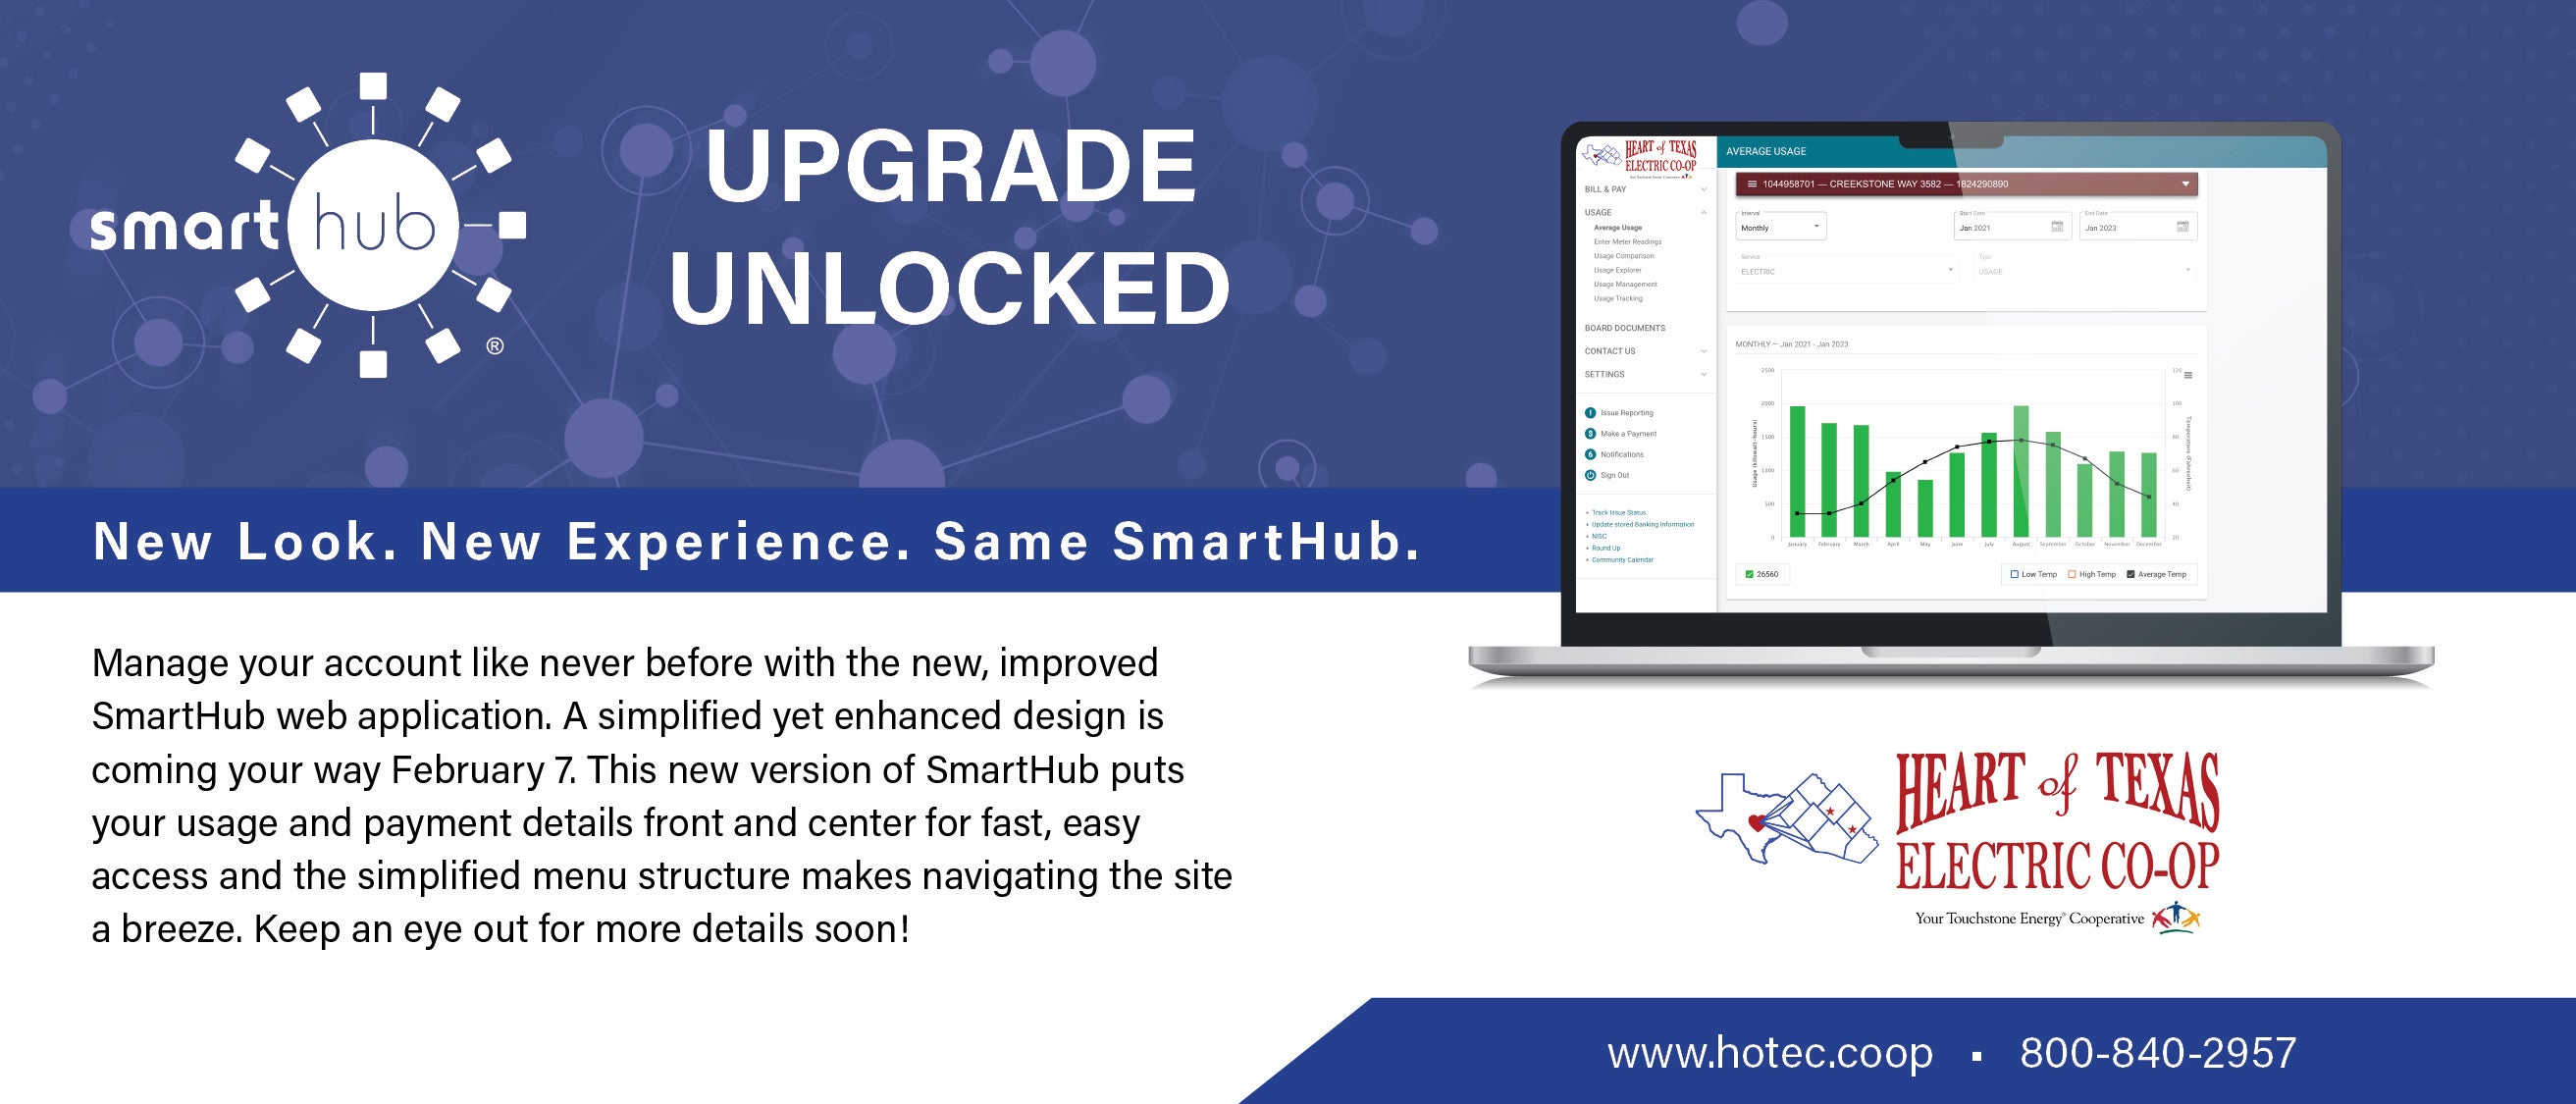 SmartHub - Upgrade Unlocked